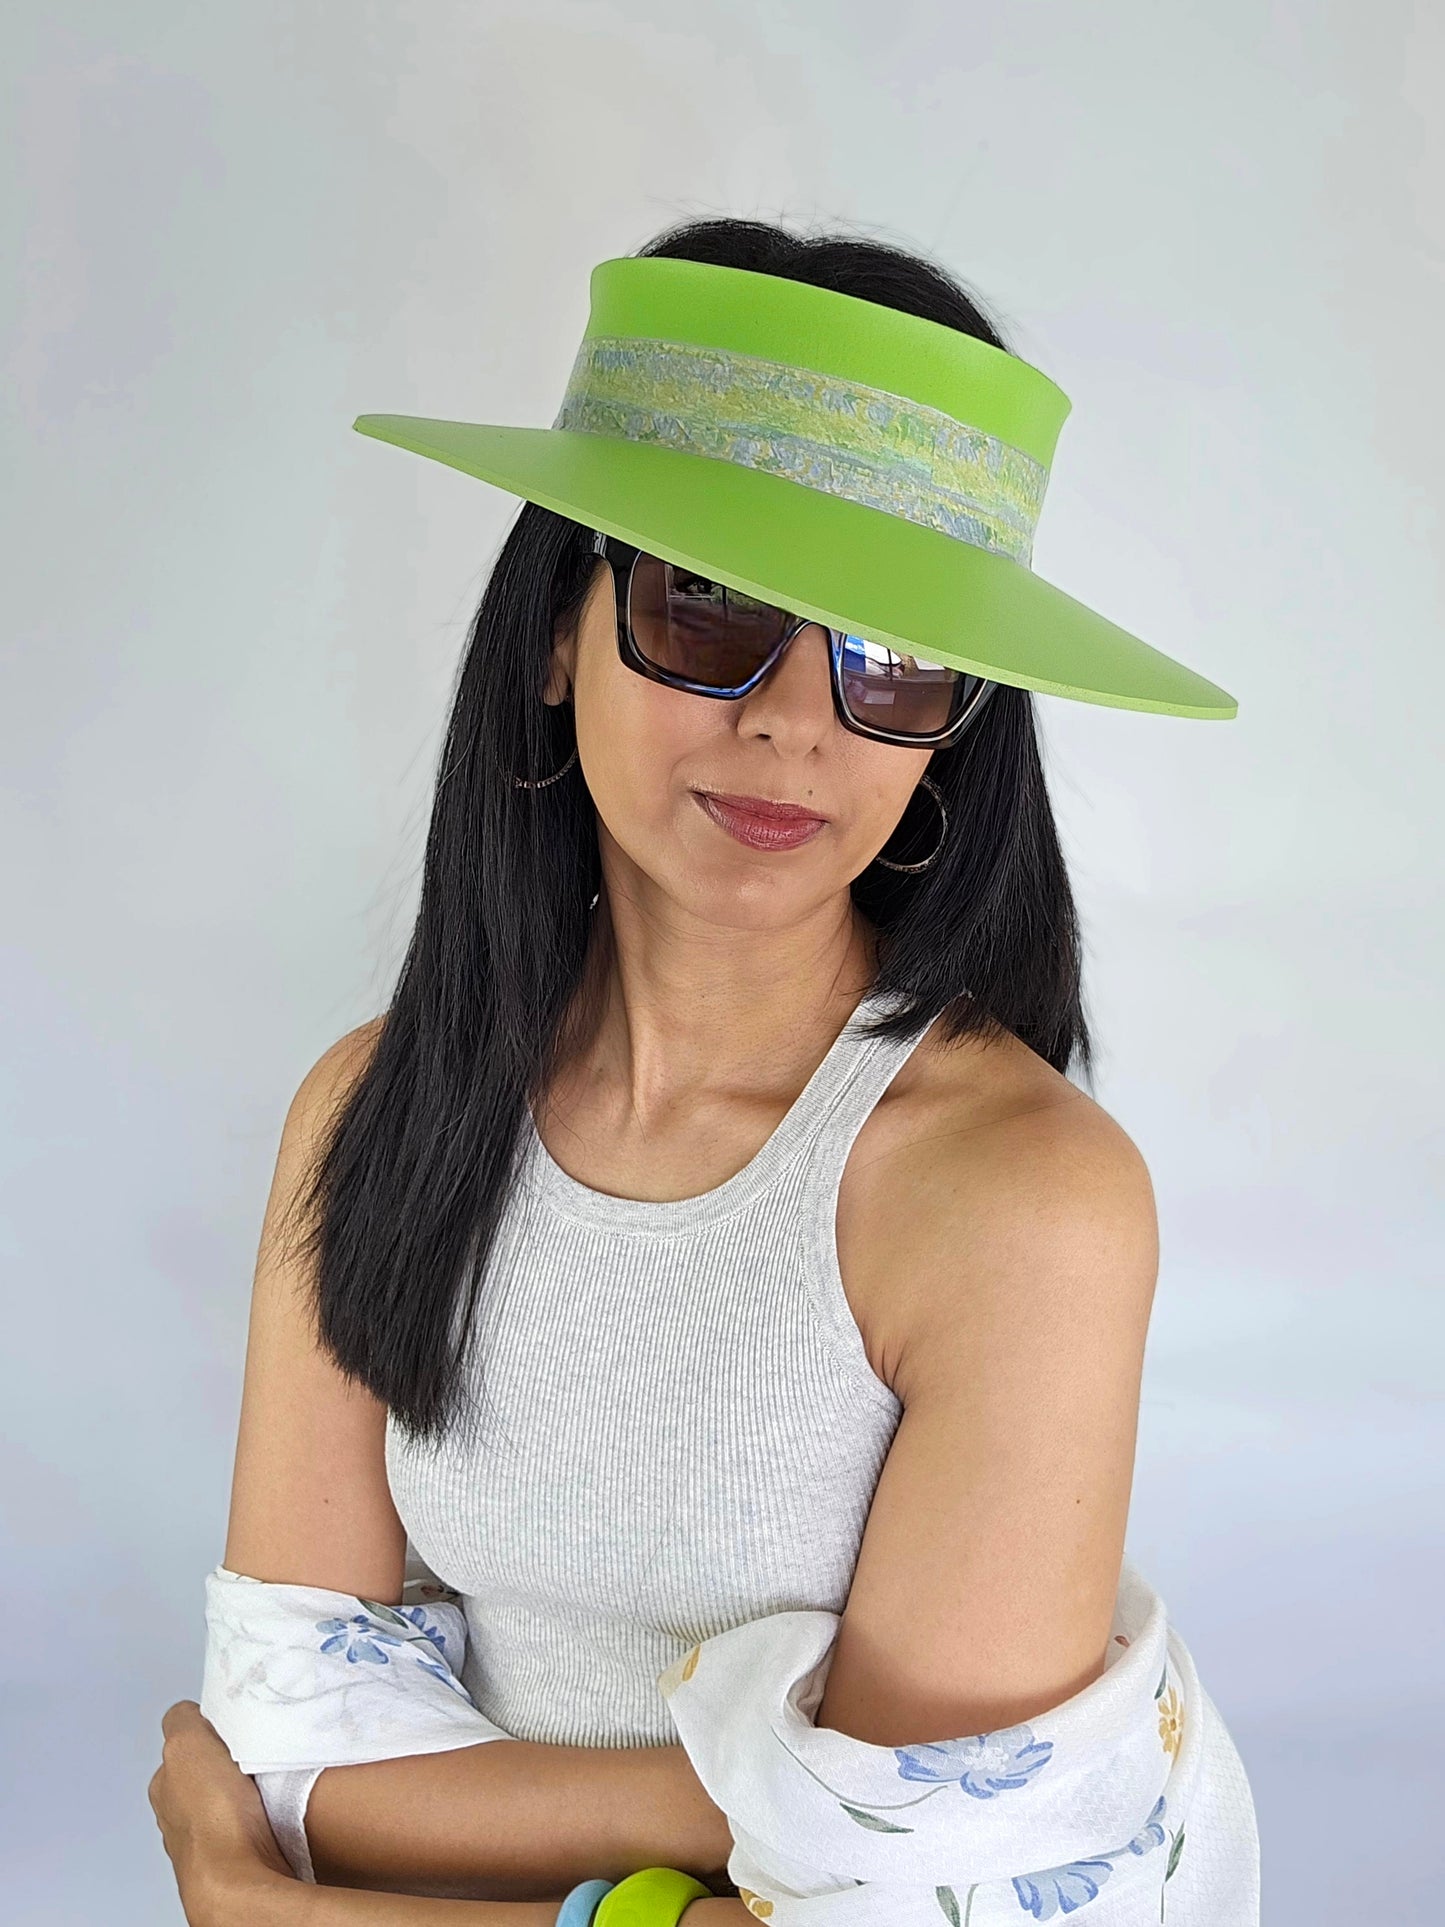 Neon Green Audrey Sun Visor Hat with Lovely Monet Style Floral Band: Tea, Walks, Brunch, Asian, Golf, Summer, Church, No Headache, Pool, Beach